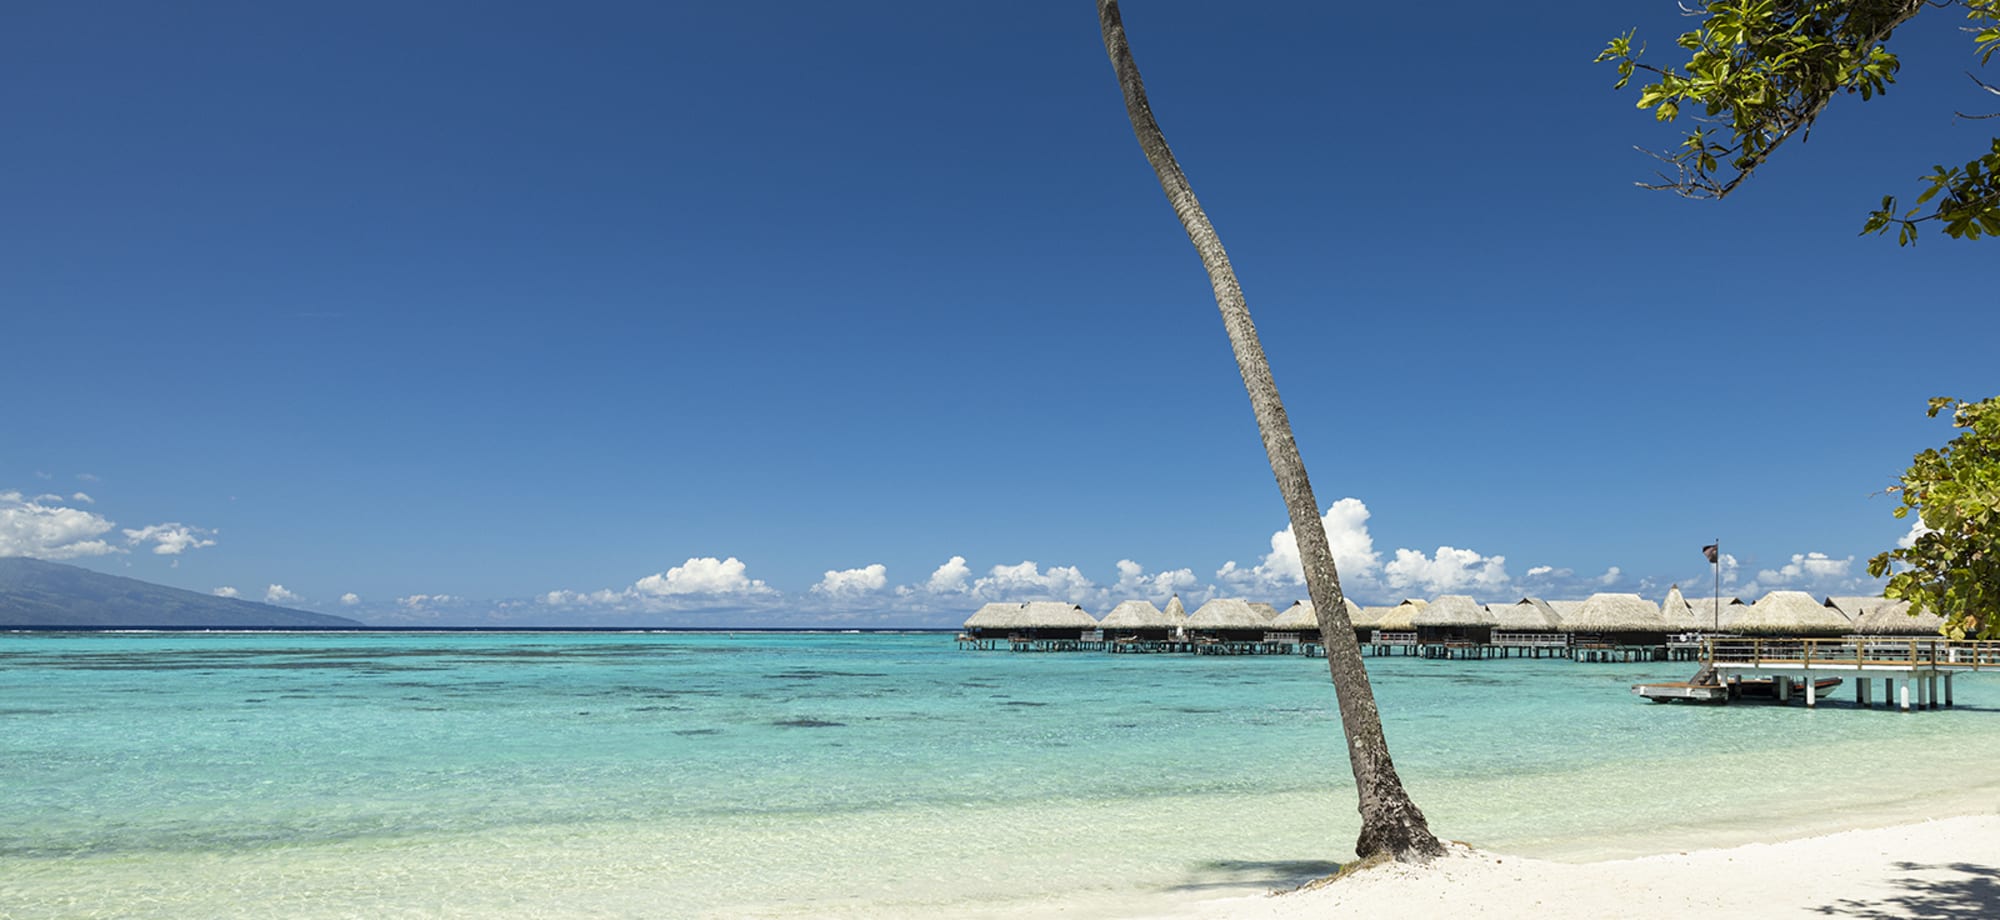 Palm tree on the beach by crystal clear ocean